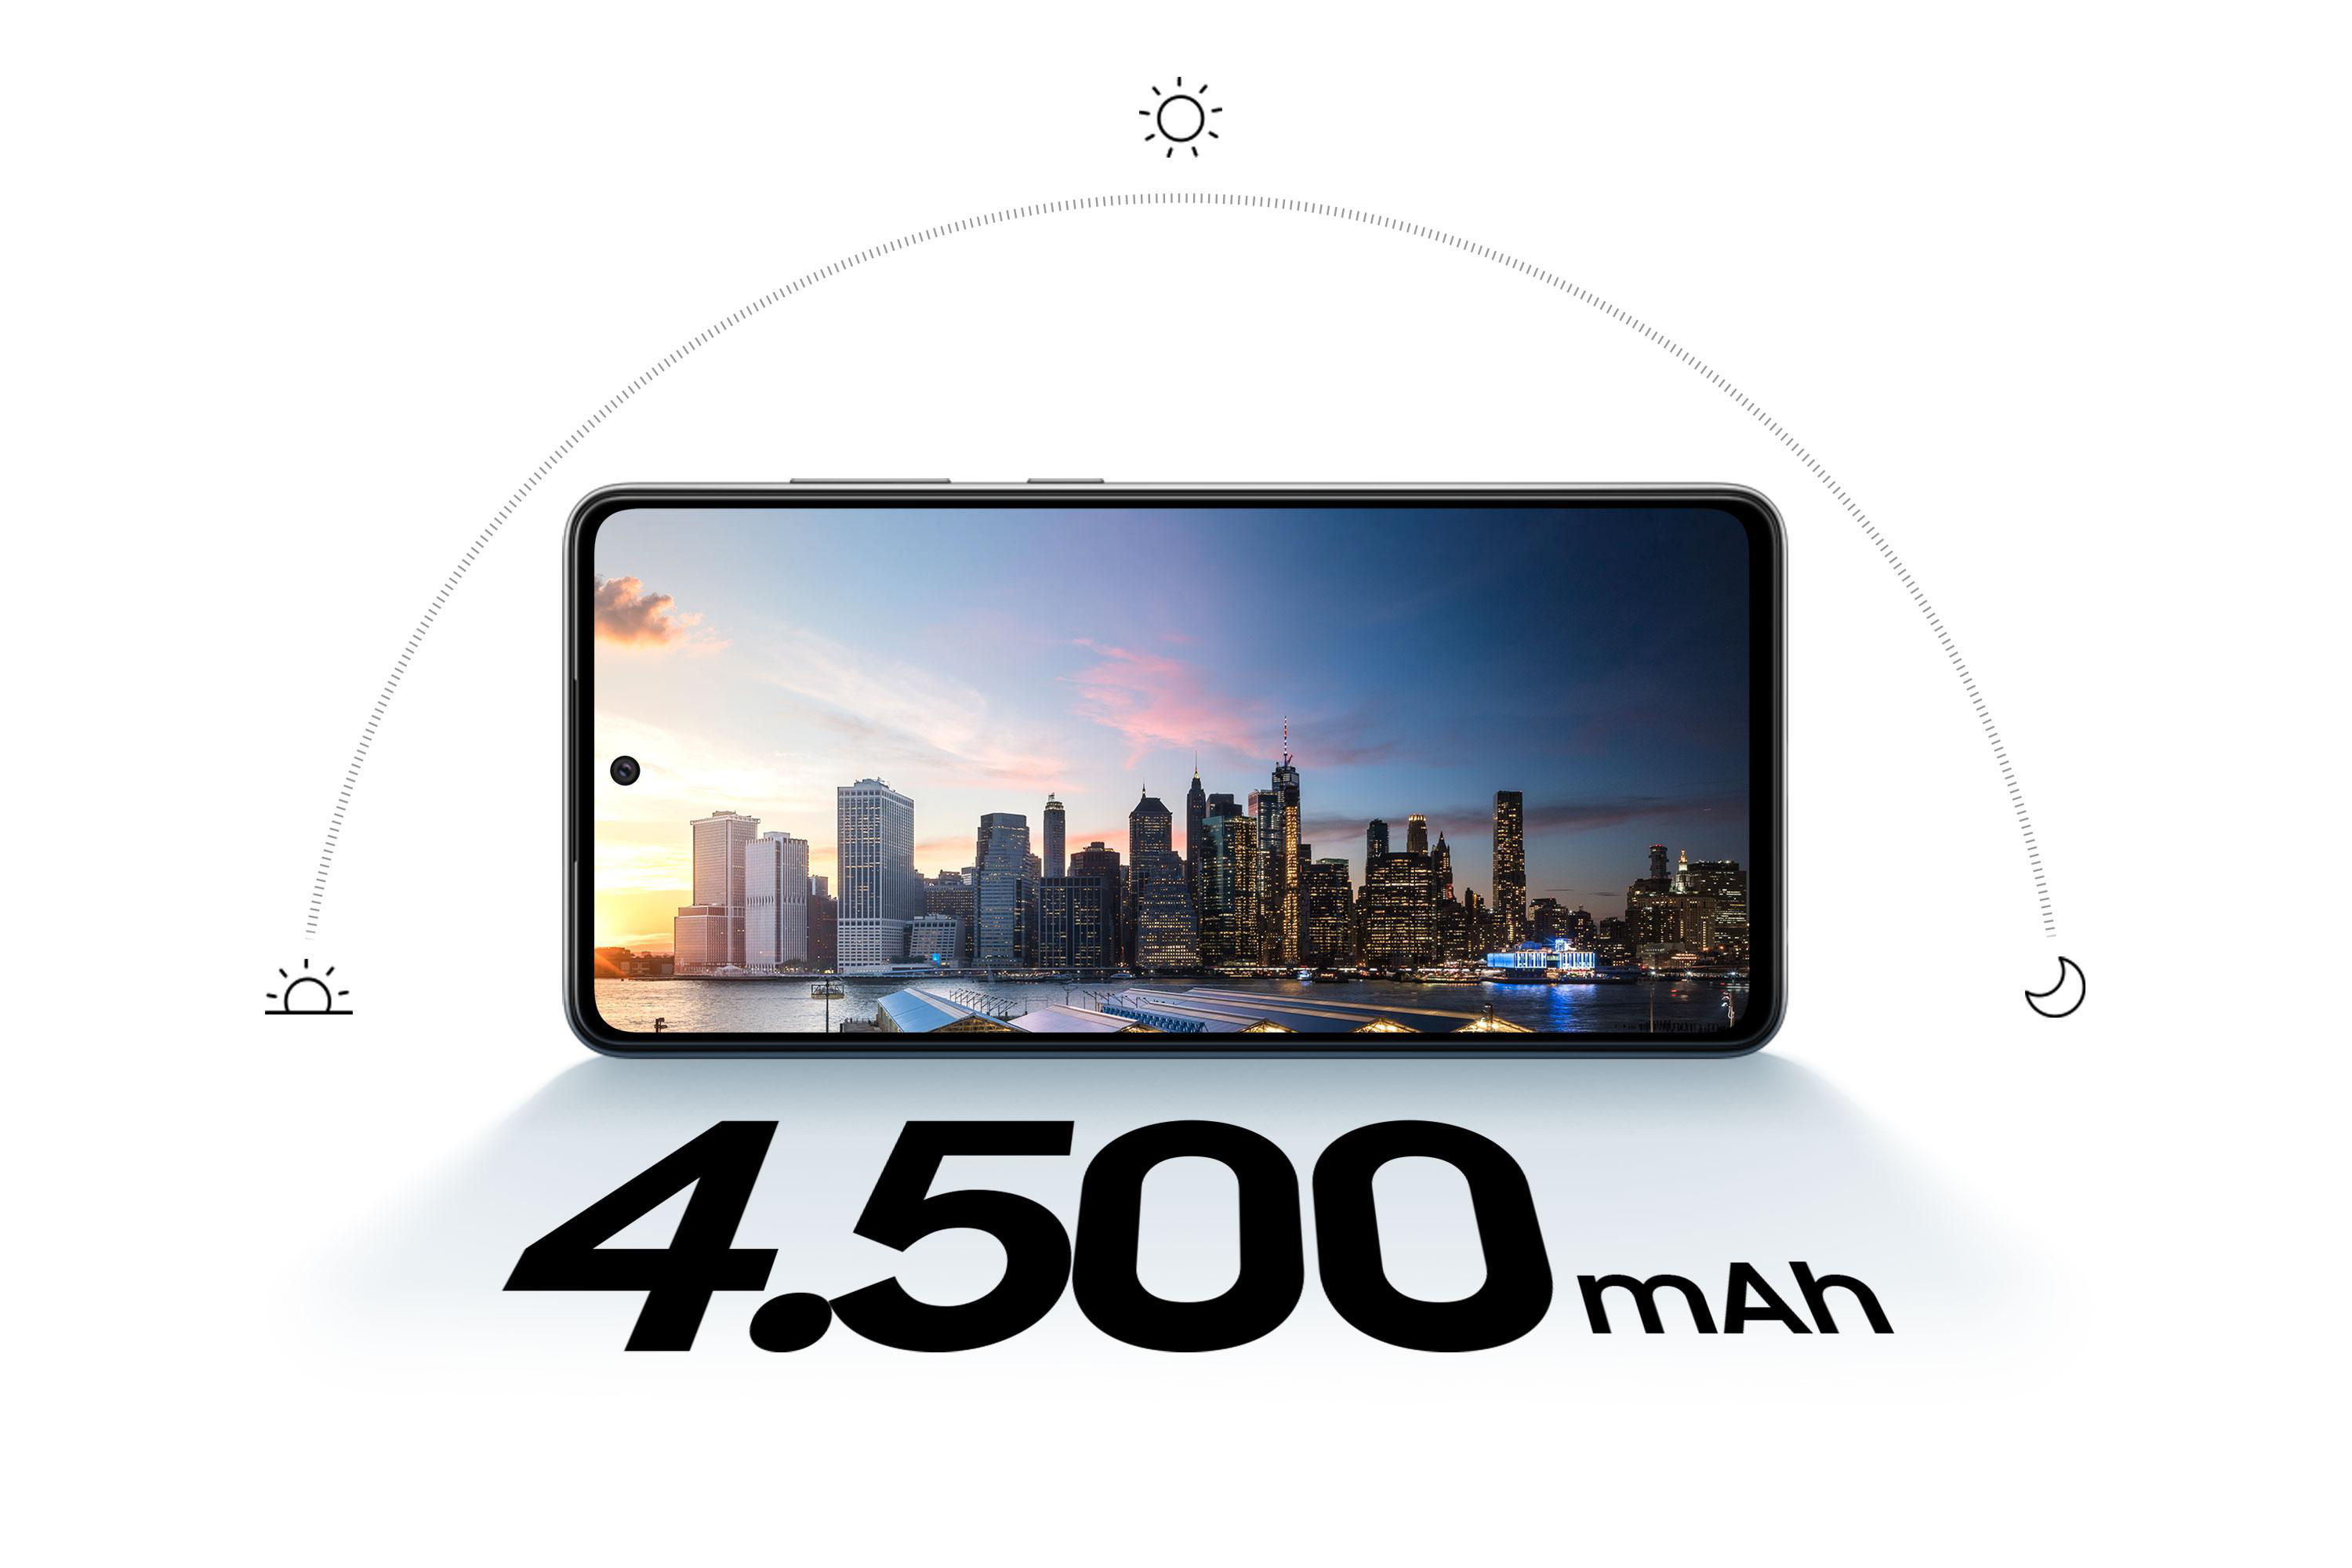 SAMSUNG Galaxy 5G White Awesome 128 A52 SIM Dual GB